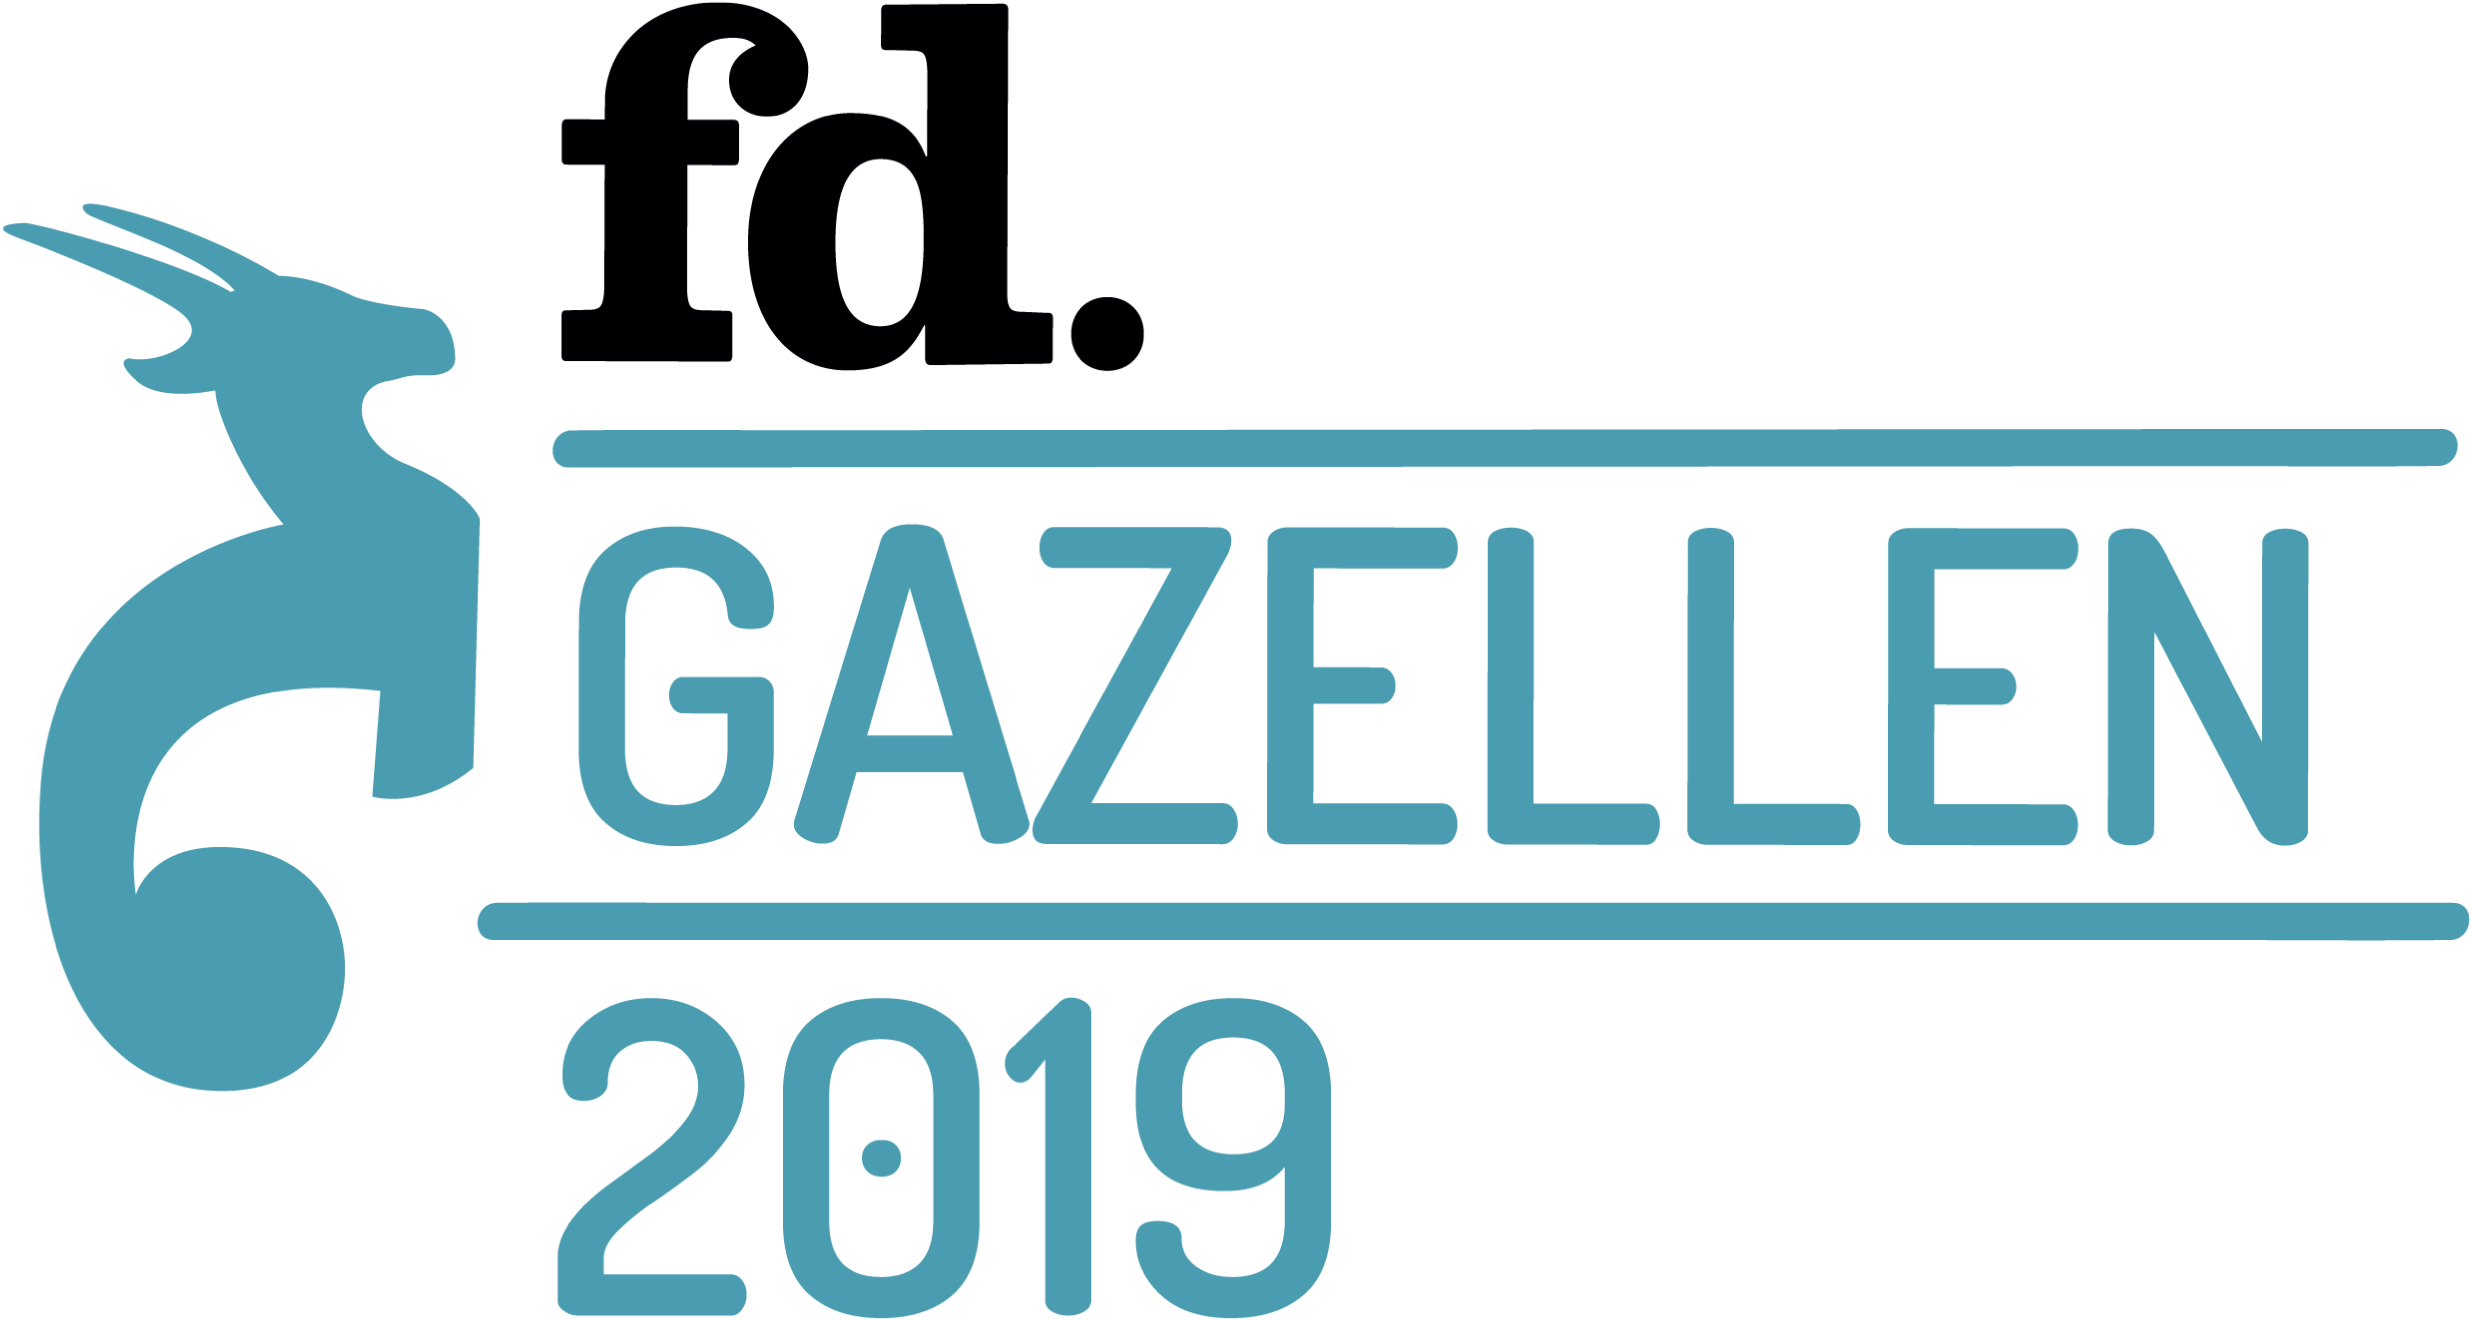 FD gazelle award 2019